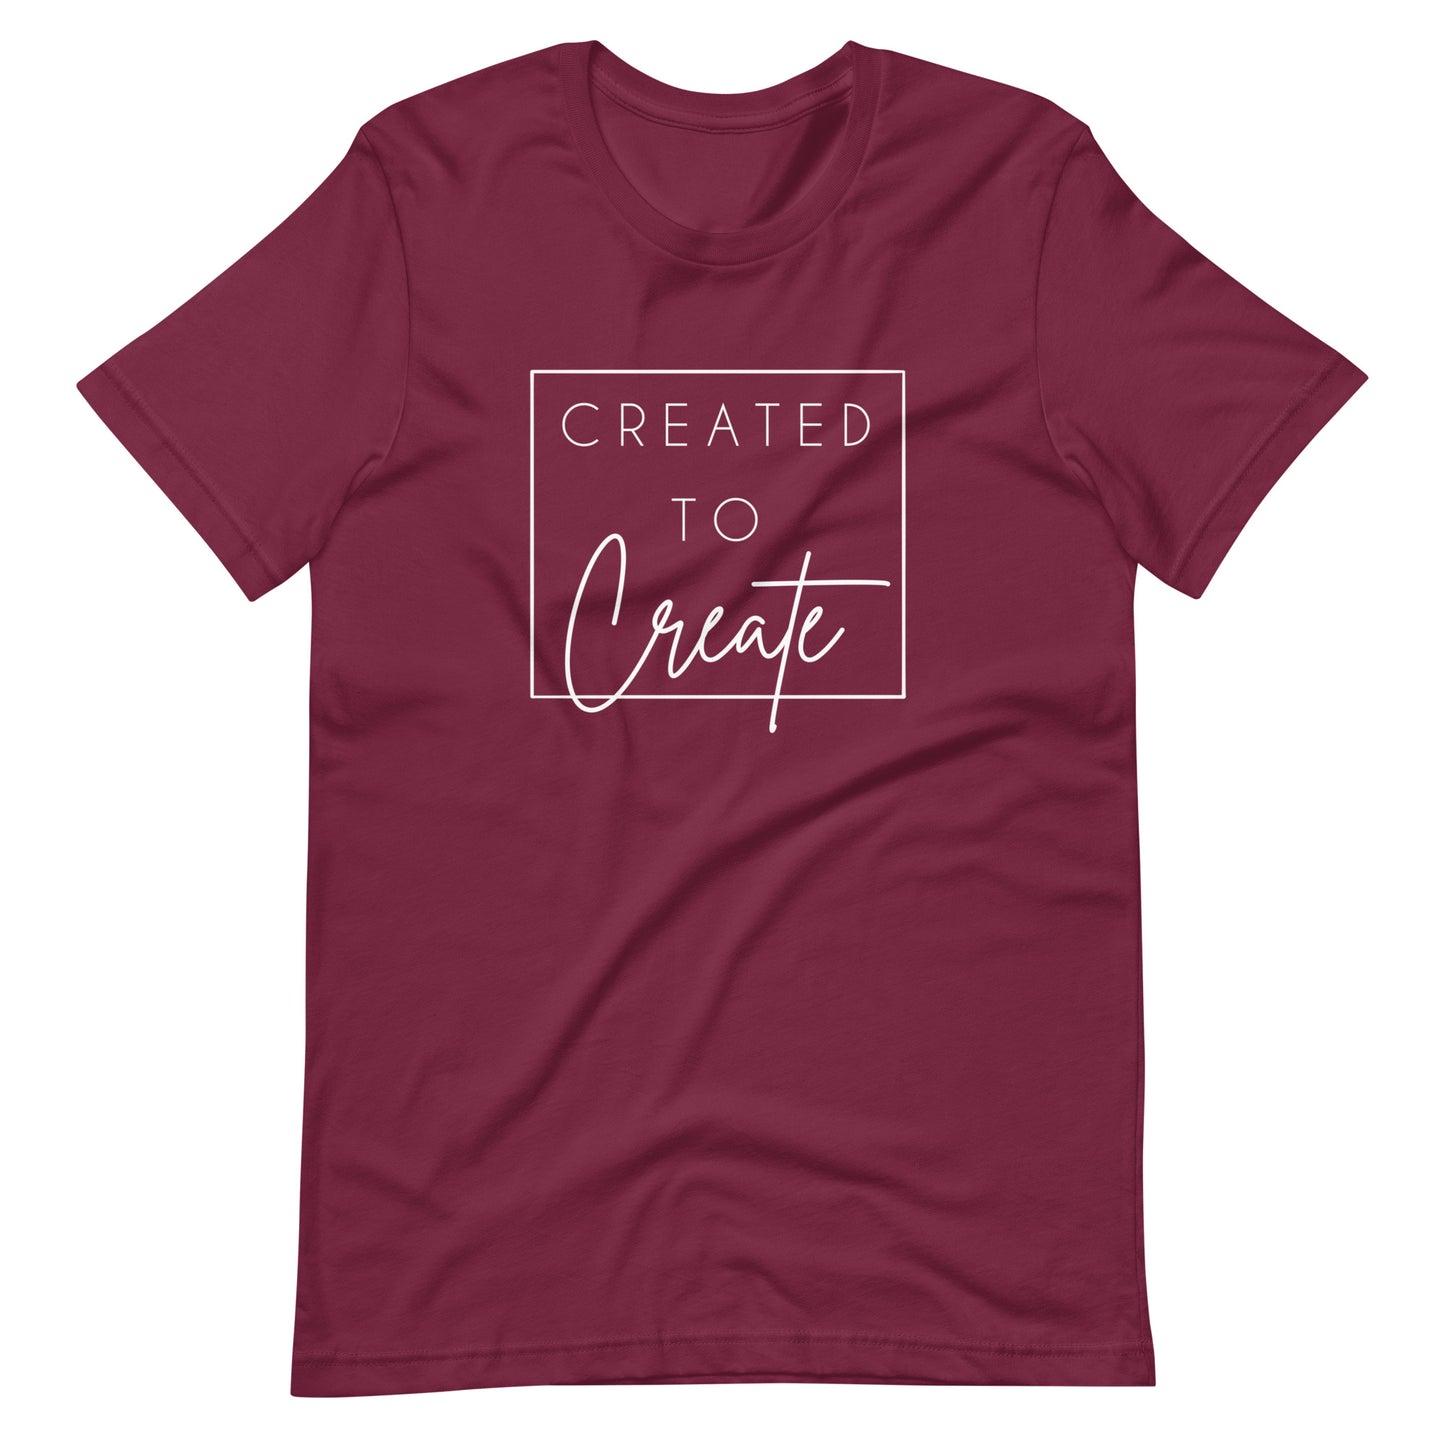 Created to Create Short-Sleeve Unisex T-Shirt, Maker Shirt, Crafting Shirt